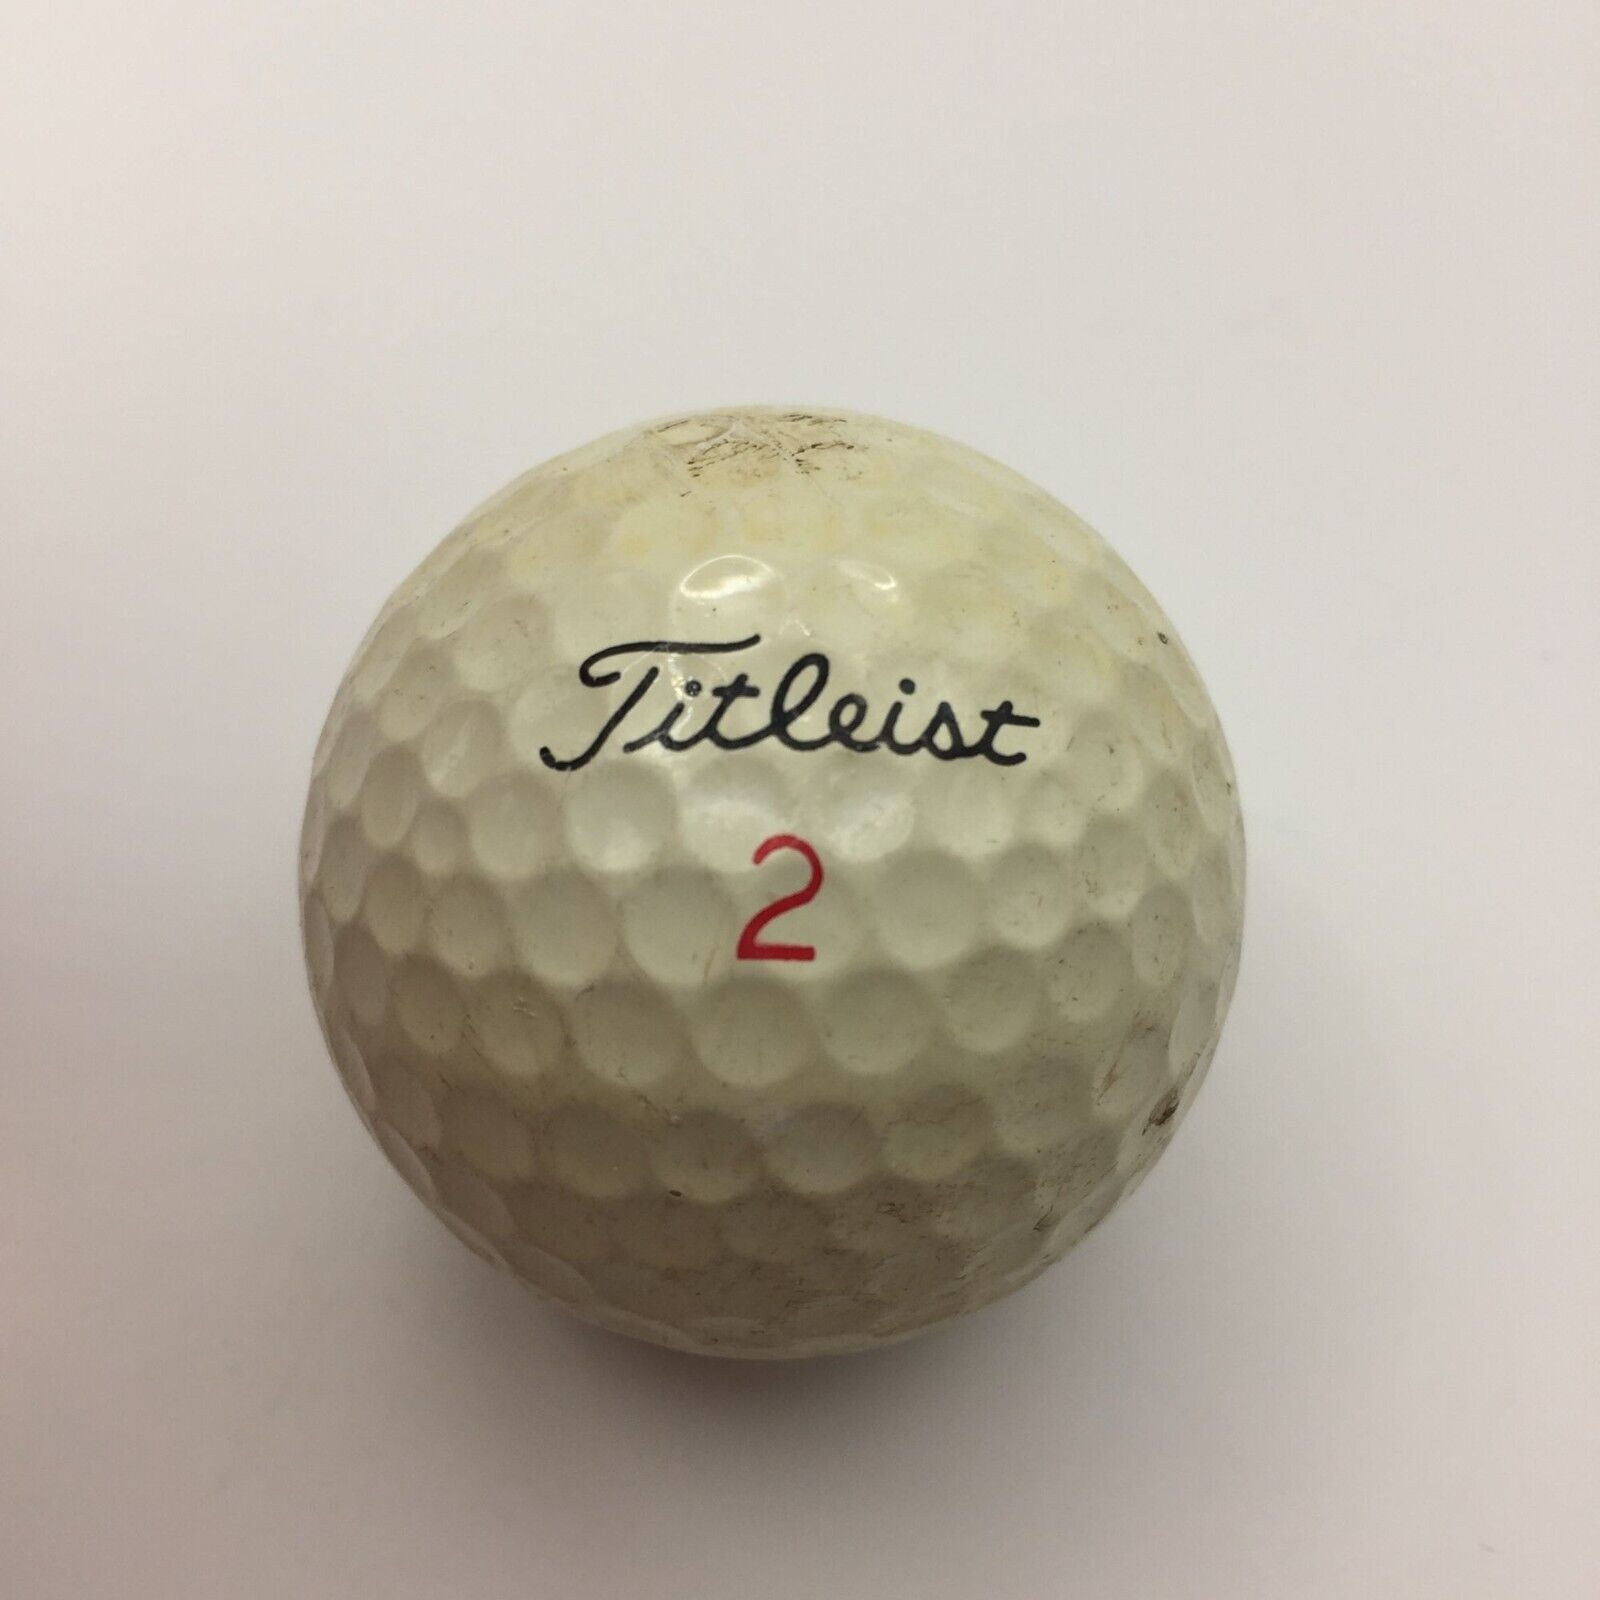 Primary image for Titleist 2 Pro V1X-332 Cream White Golf Ball Refurbished